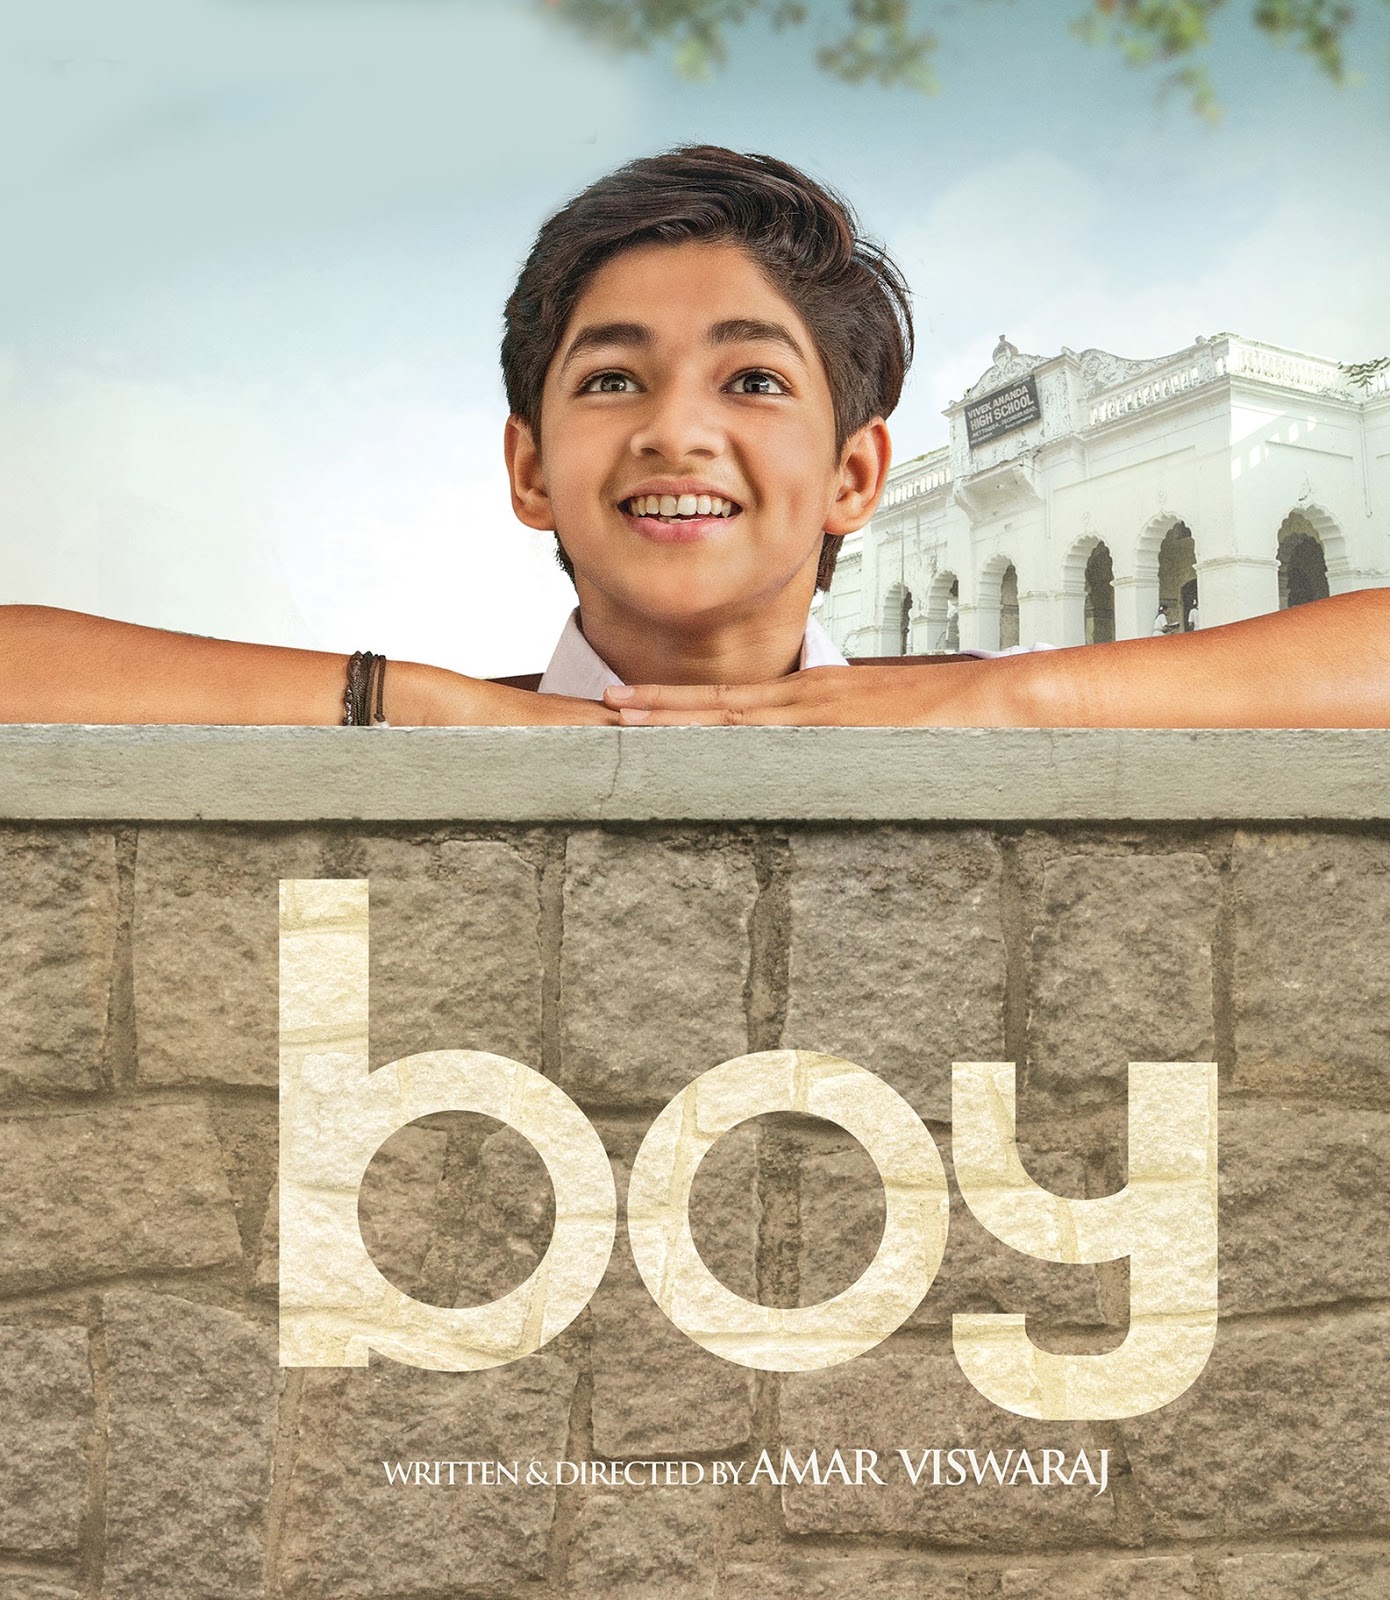 Boy 2020 Hindi Dubbed Full Movie Hd Free Download Moviesdownloadkar